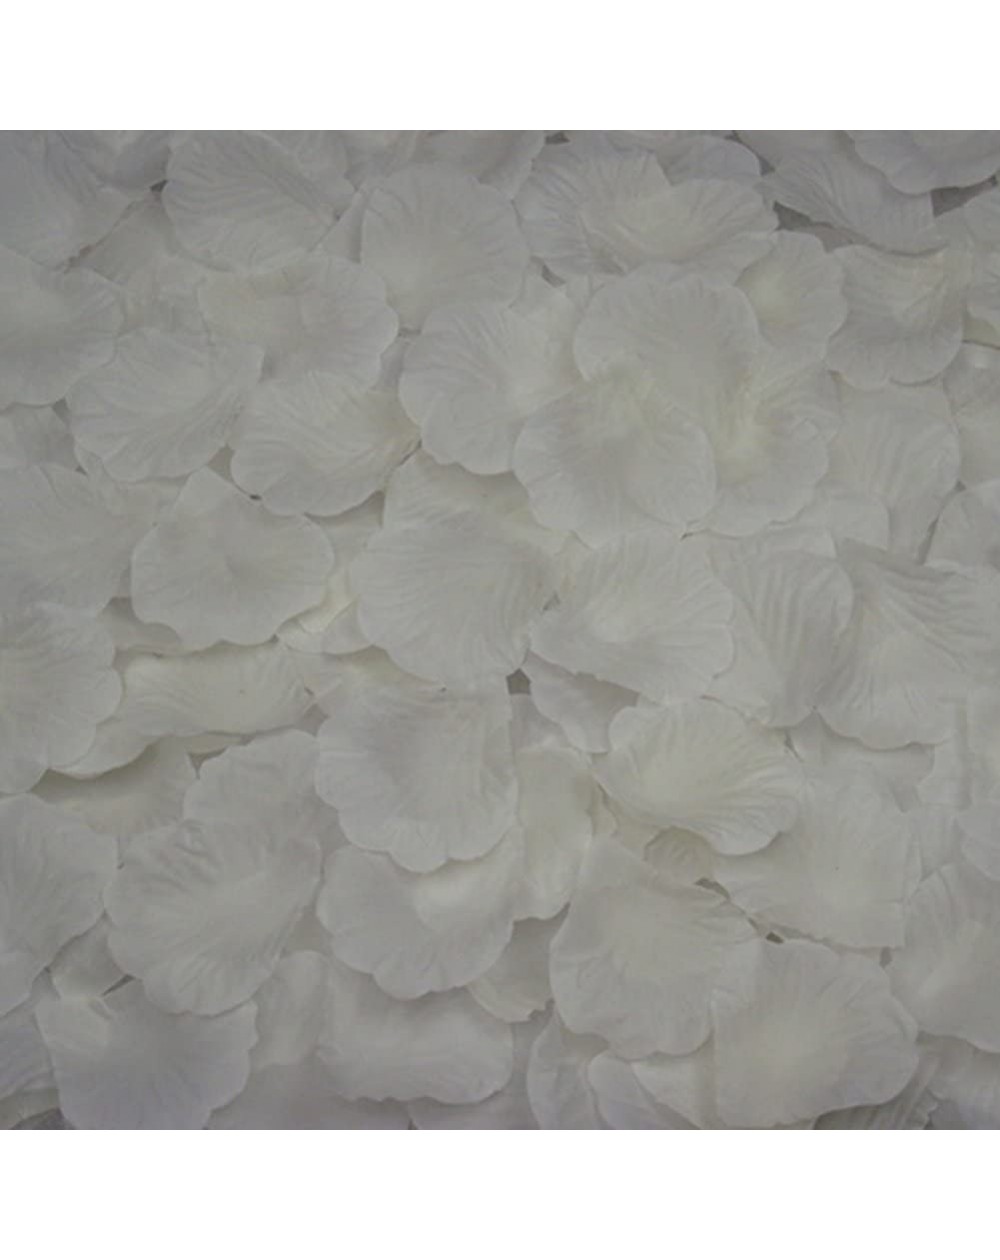 Confetti 1000 PCS Fabric Silk Flower Rose Petals Wedding Party Decoration Table Confetti (Ivory White) - Ivory White - CT11B8...